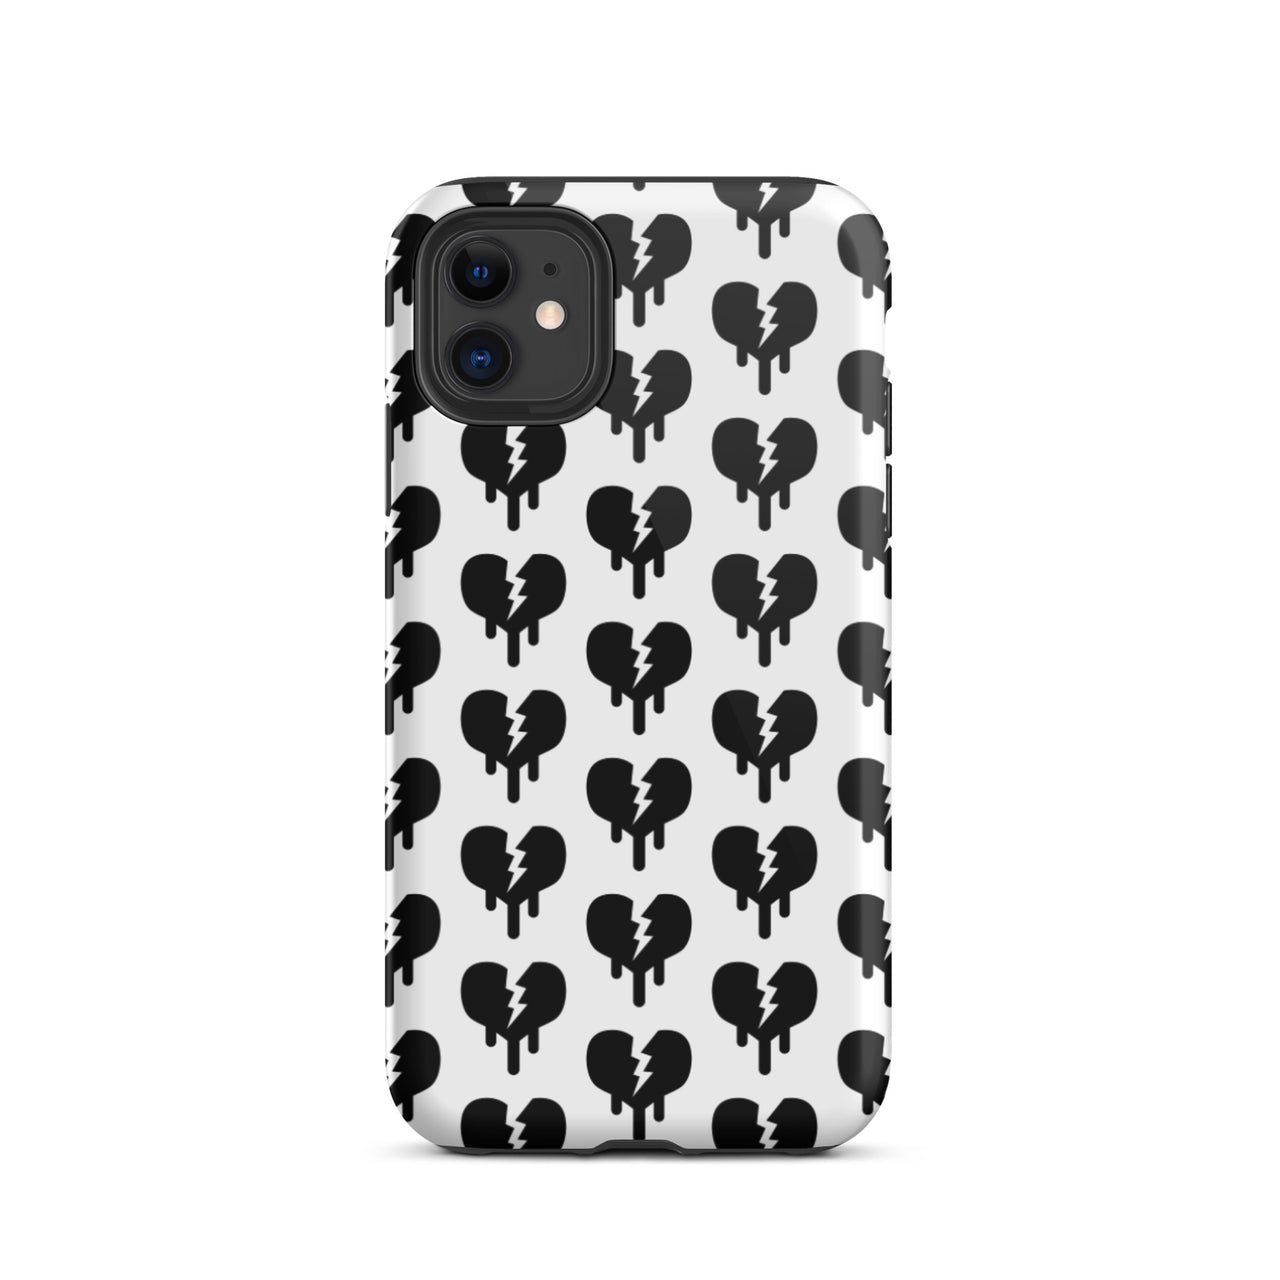 “Broken Heart” Tough iPhone case - Design Hero